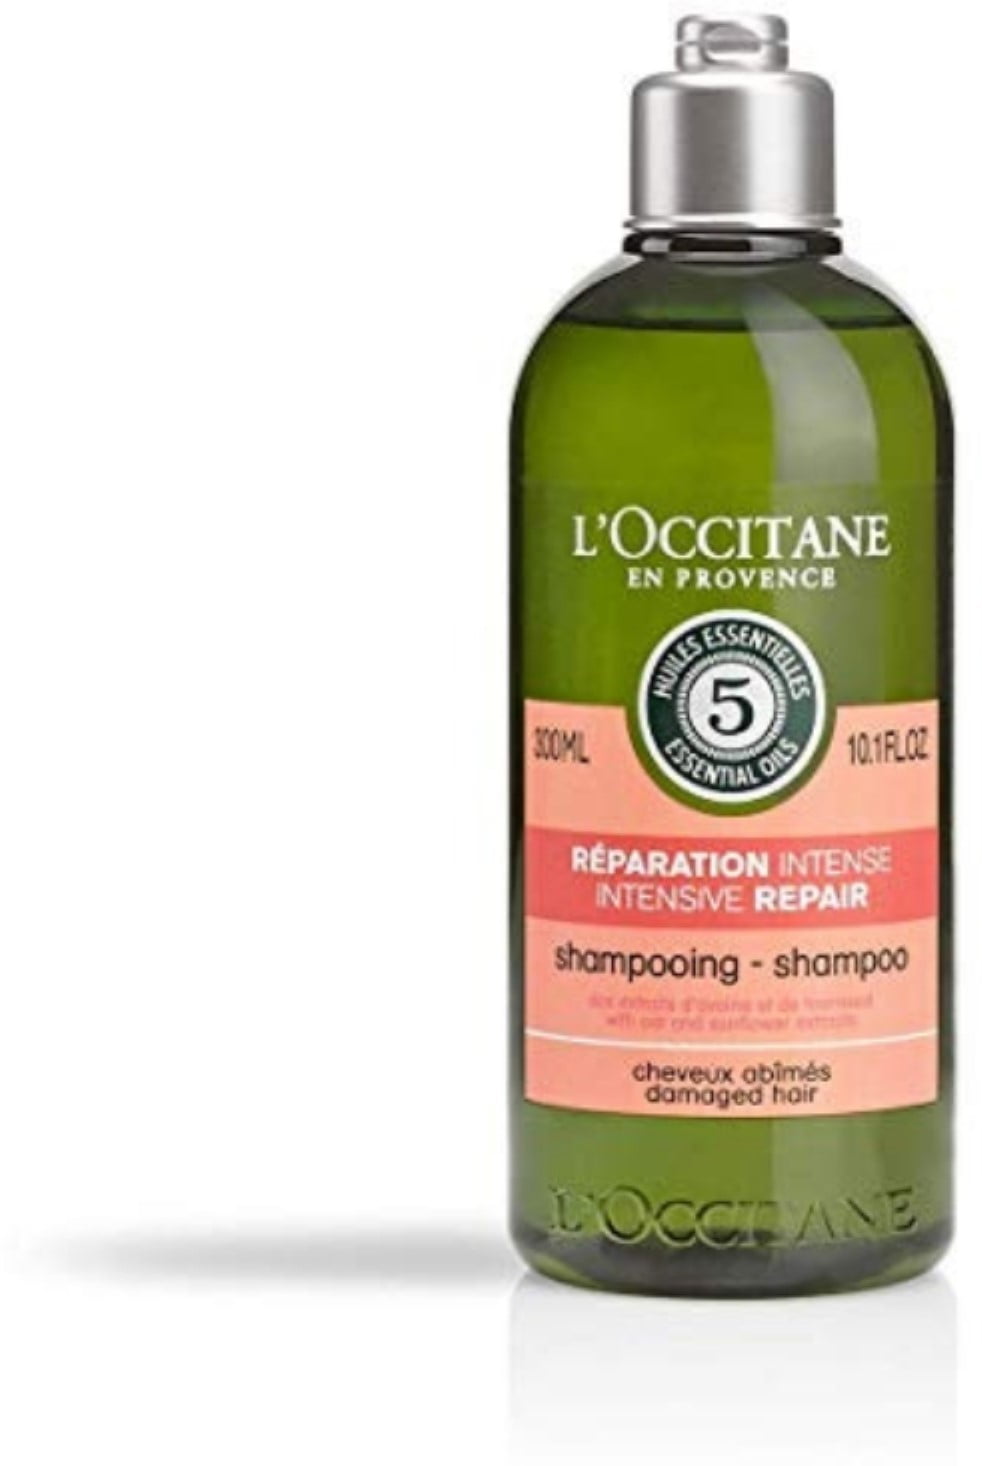 loccitane shampoo reparation intense